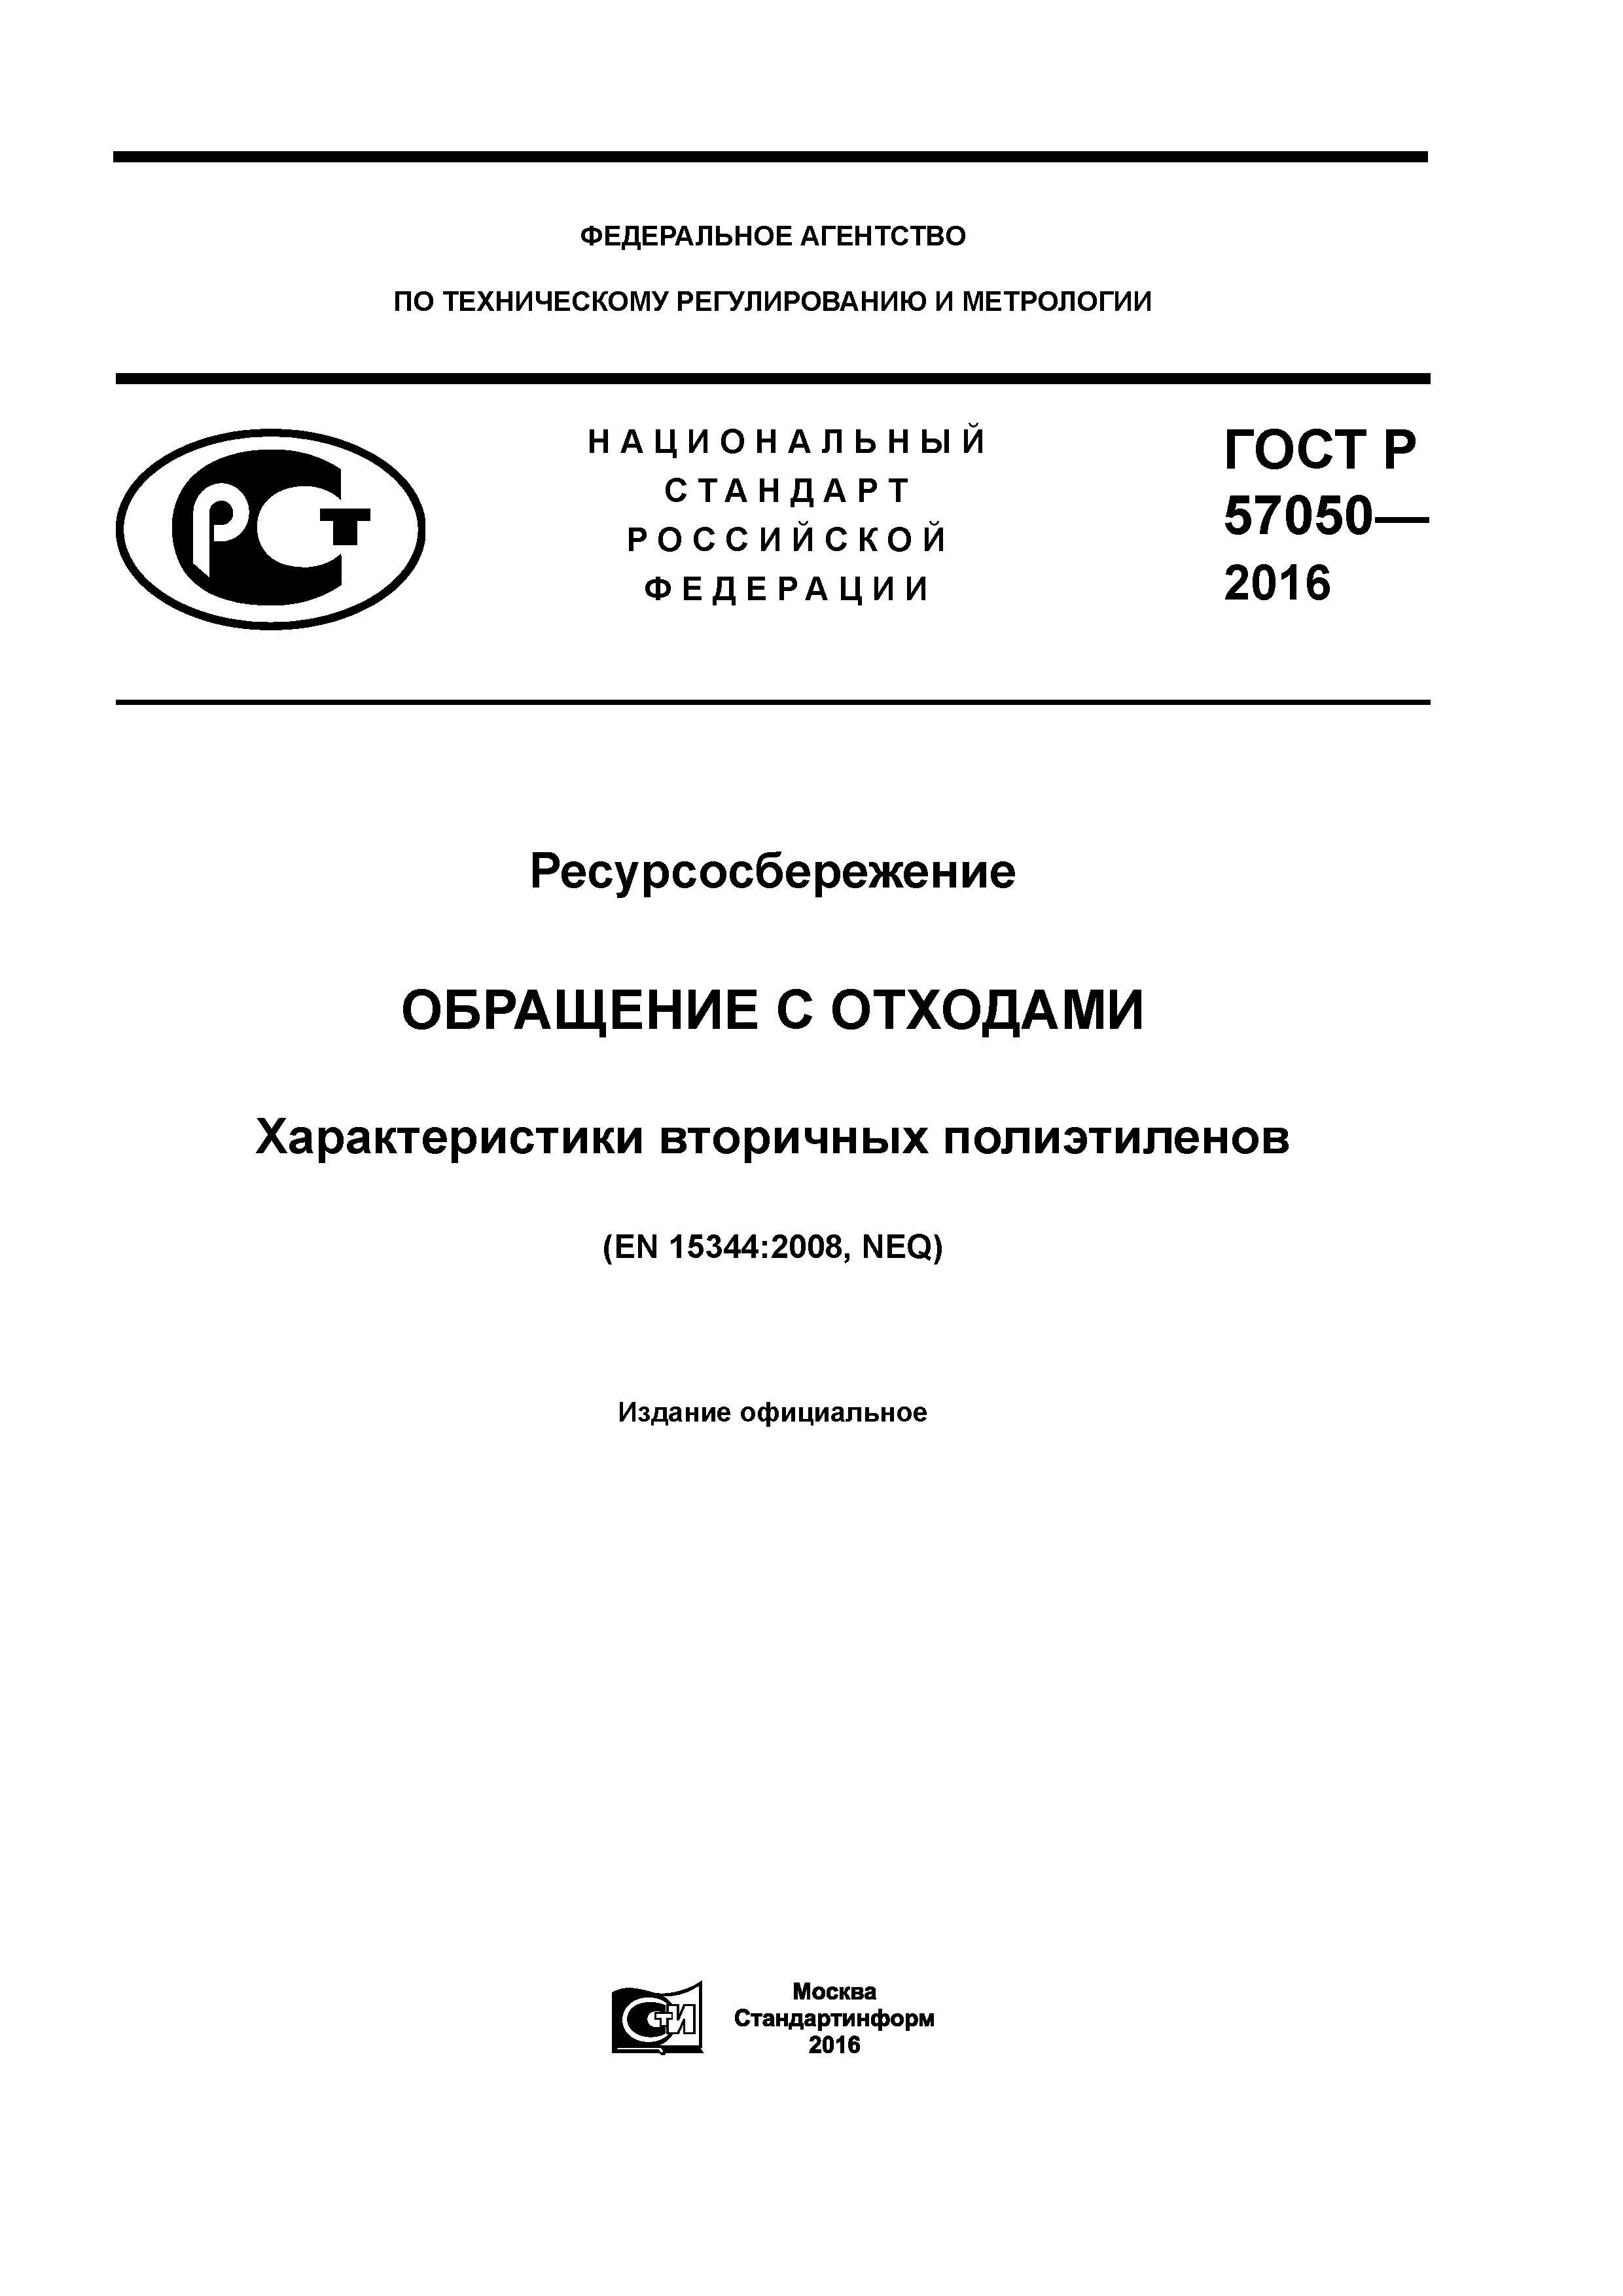 ГОСТ Р 57050-2016